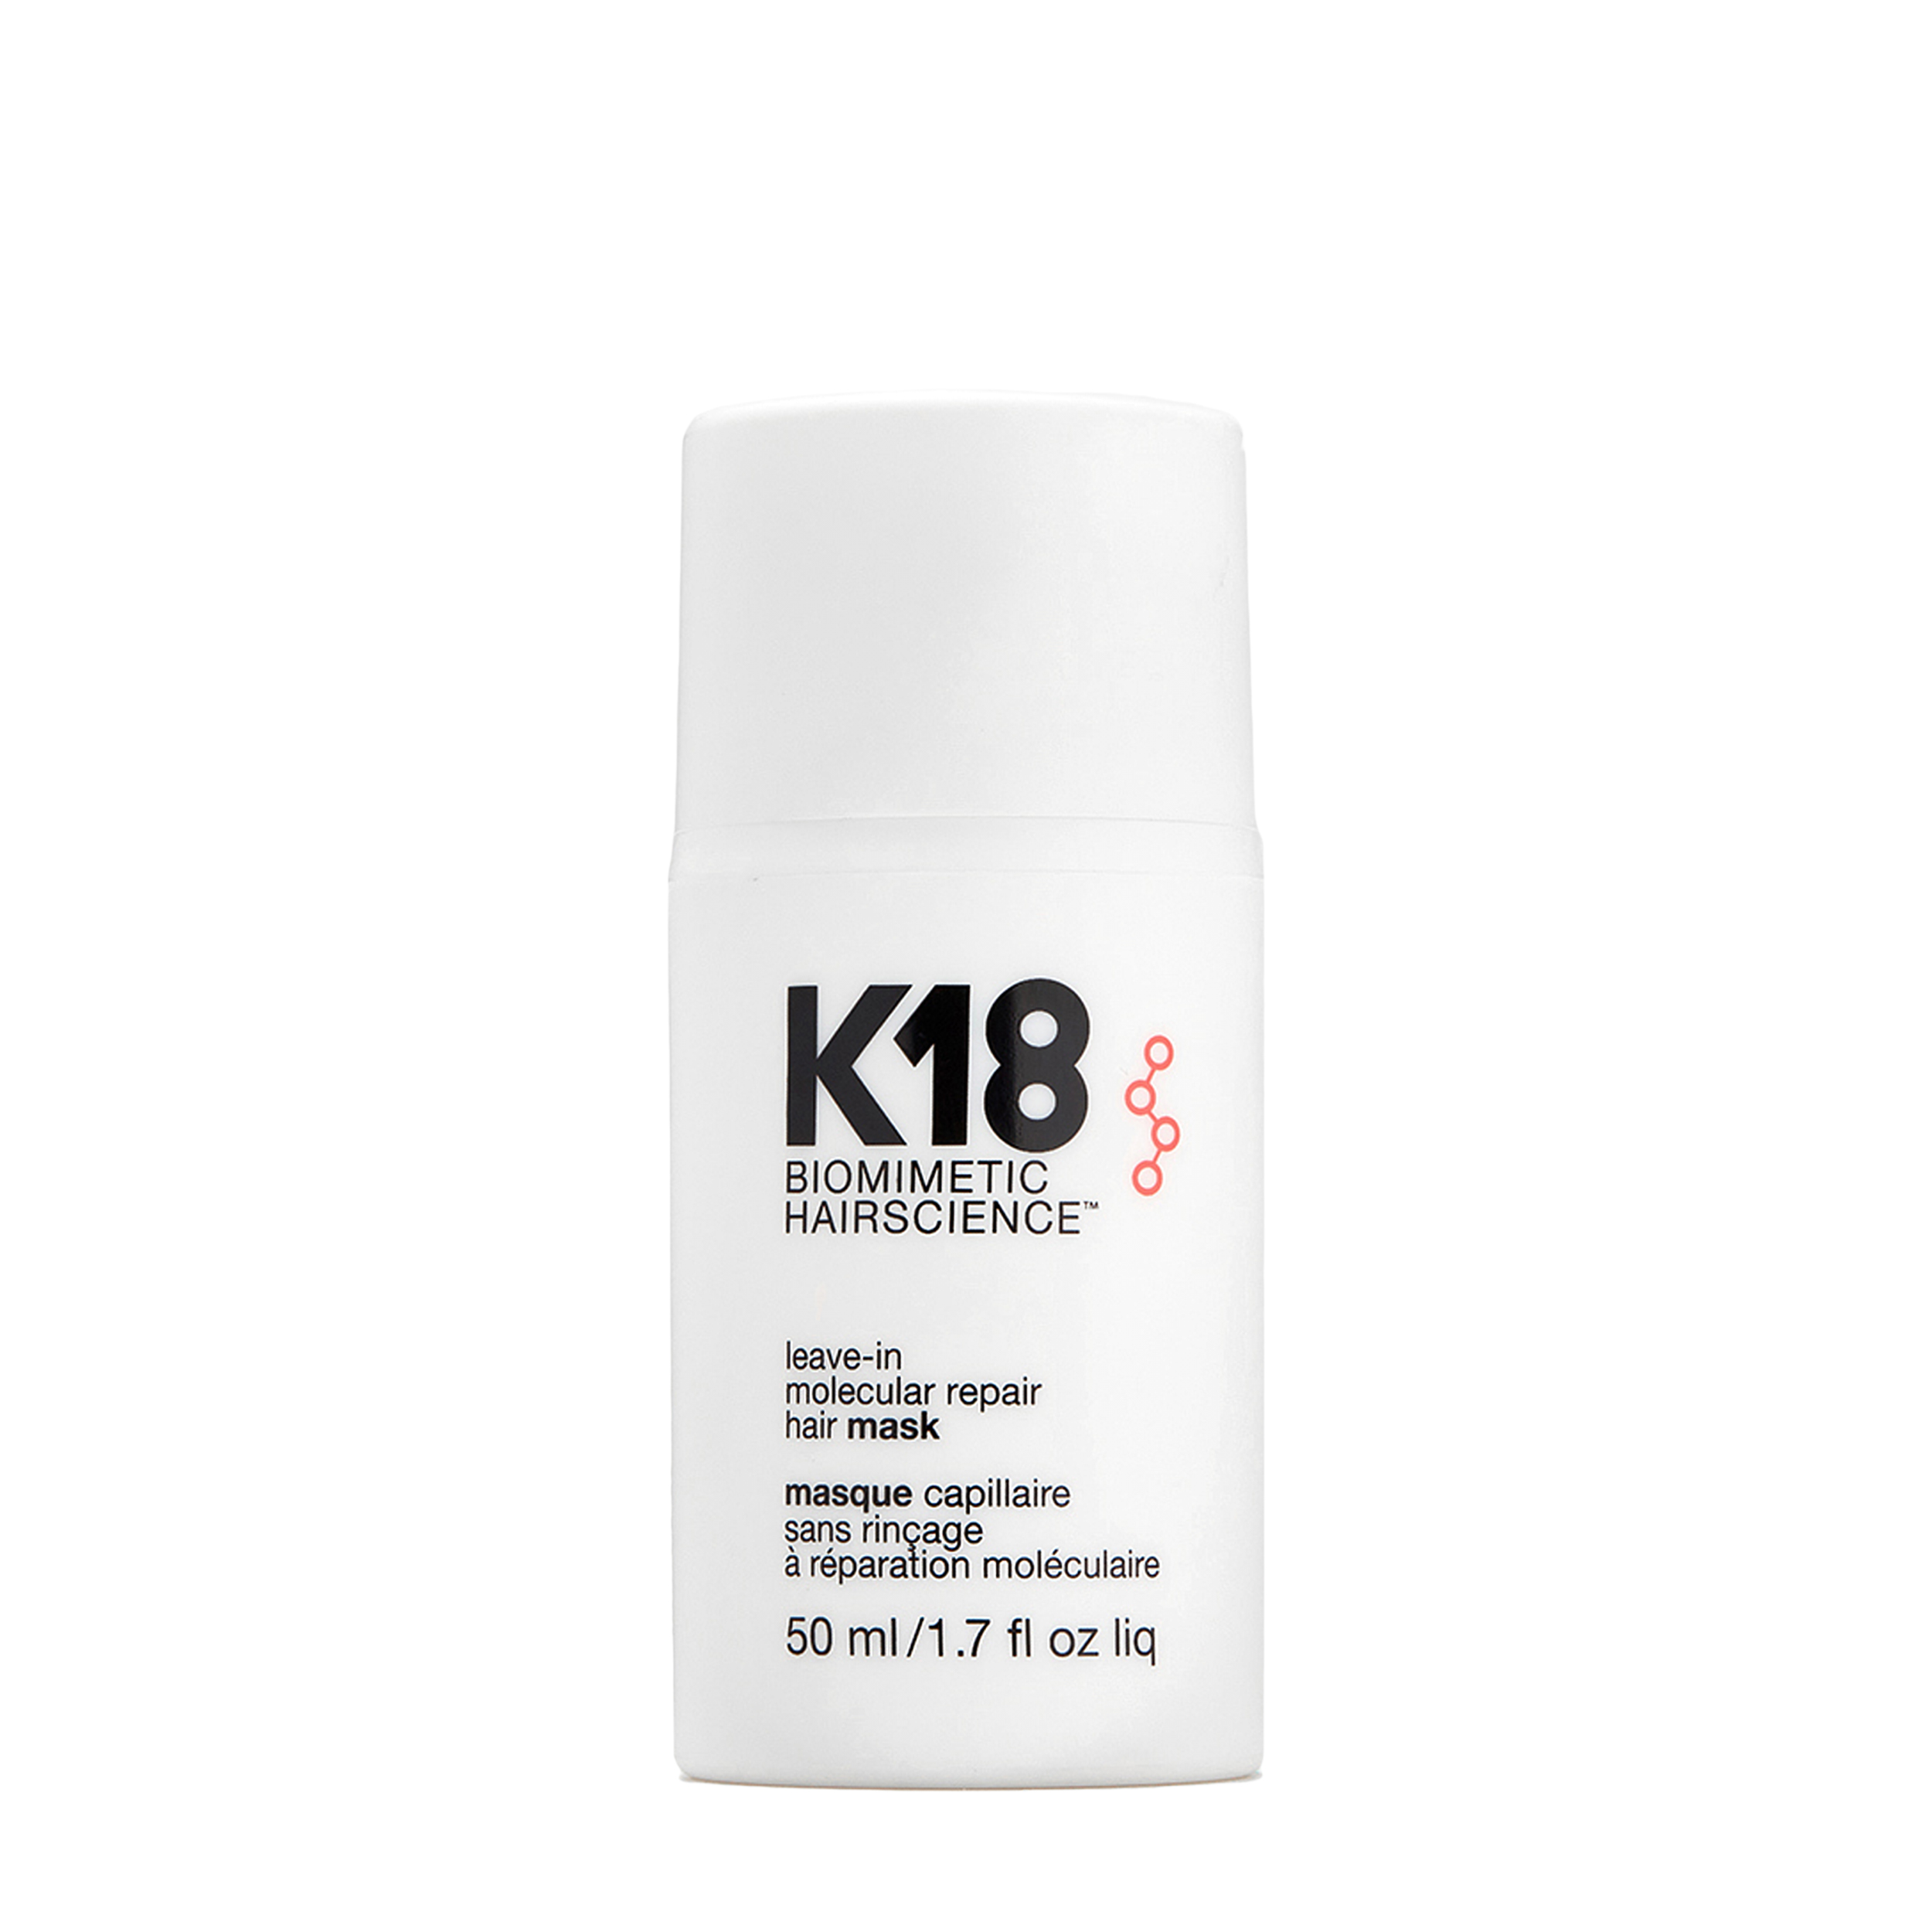 K18 K18 Несмываемая маска для молекулярного восстановления волос Leave-In Molecular Repair Hair Mask 50 мл K18-31005 - фото 1